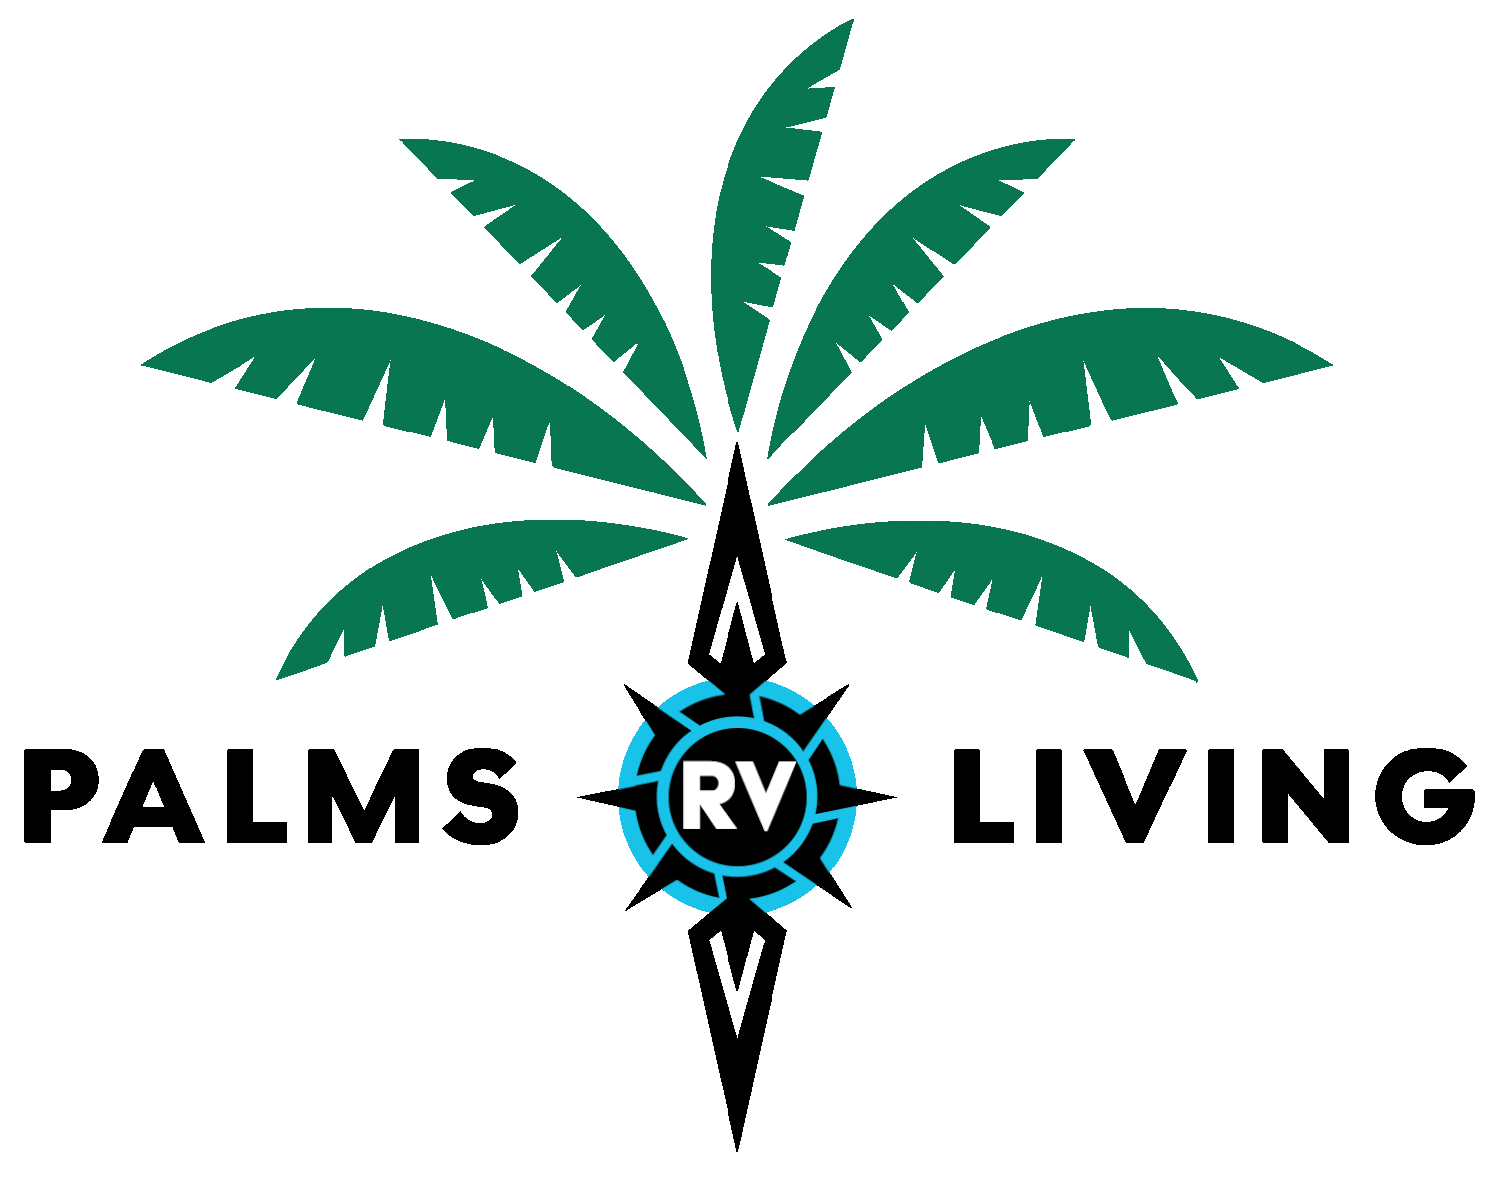 PALMS RV LIVING